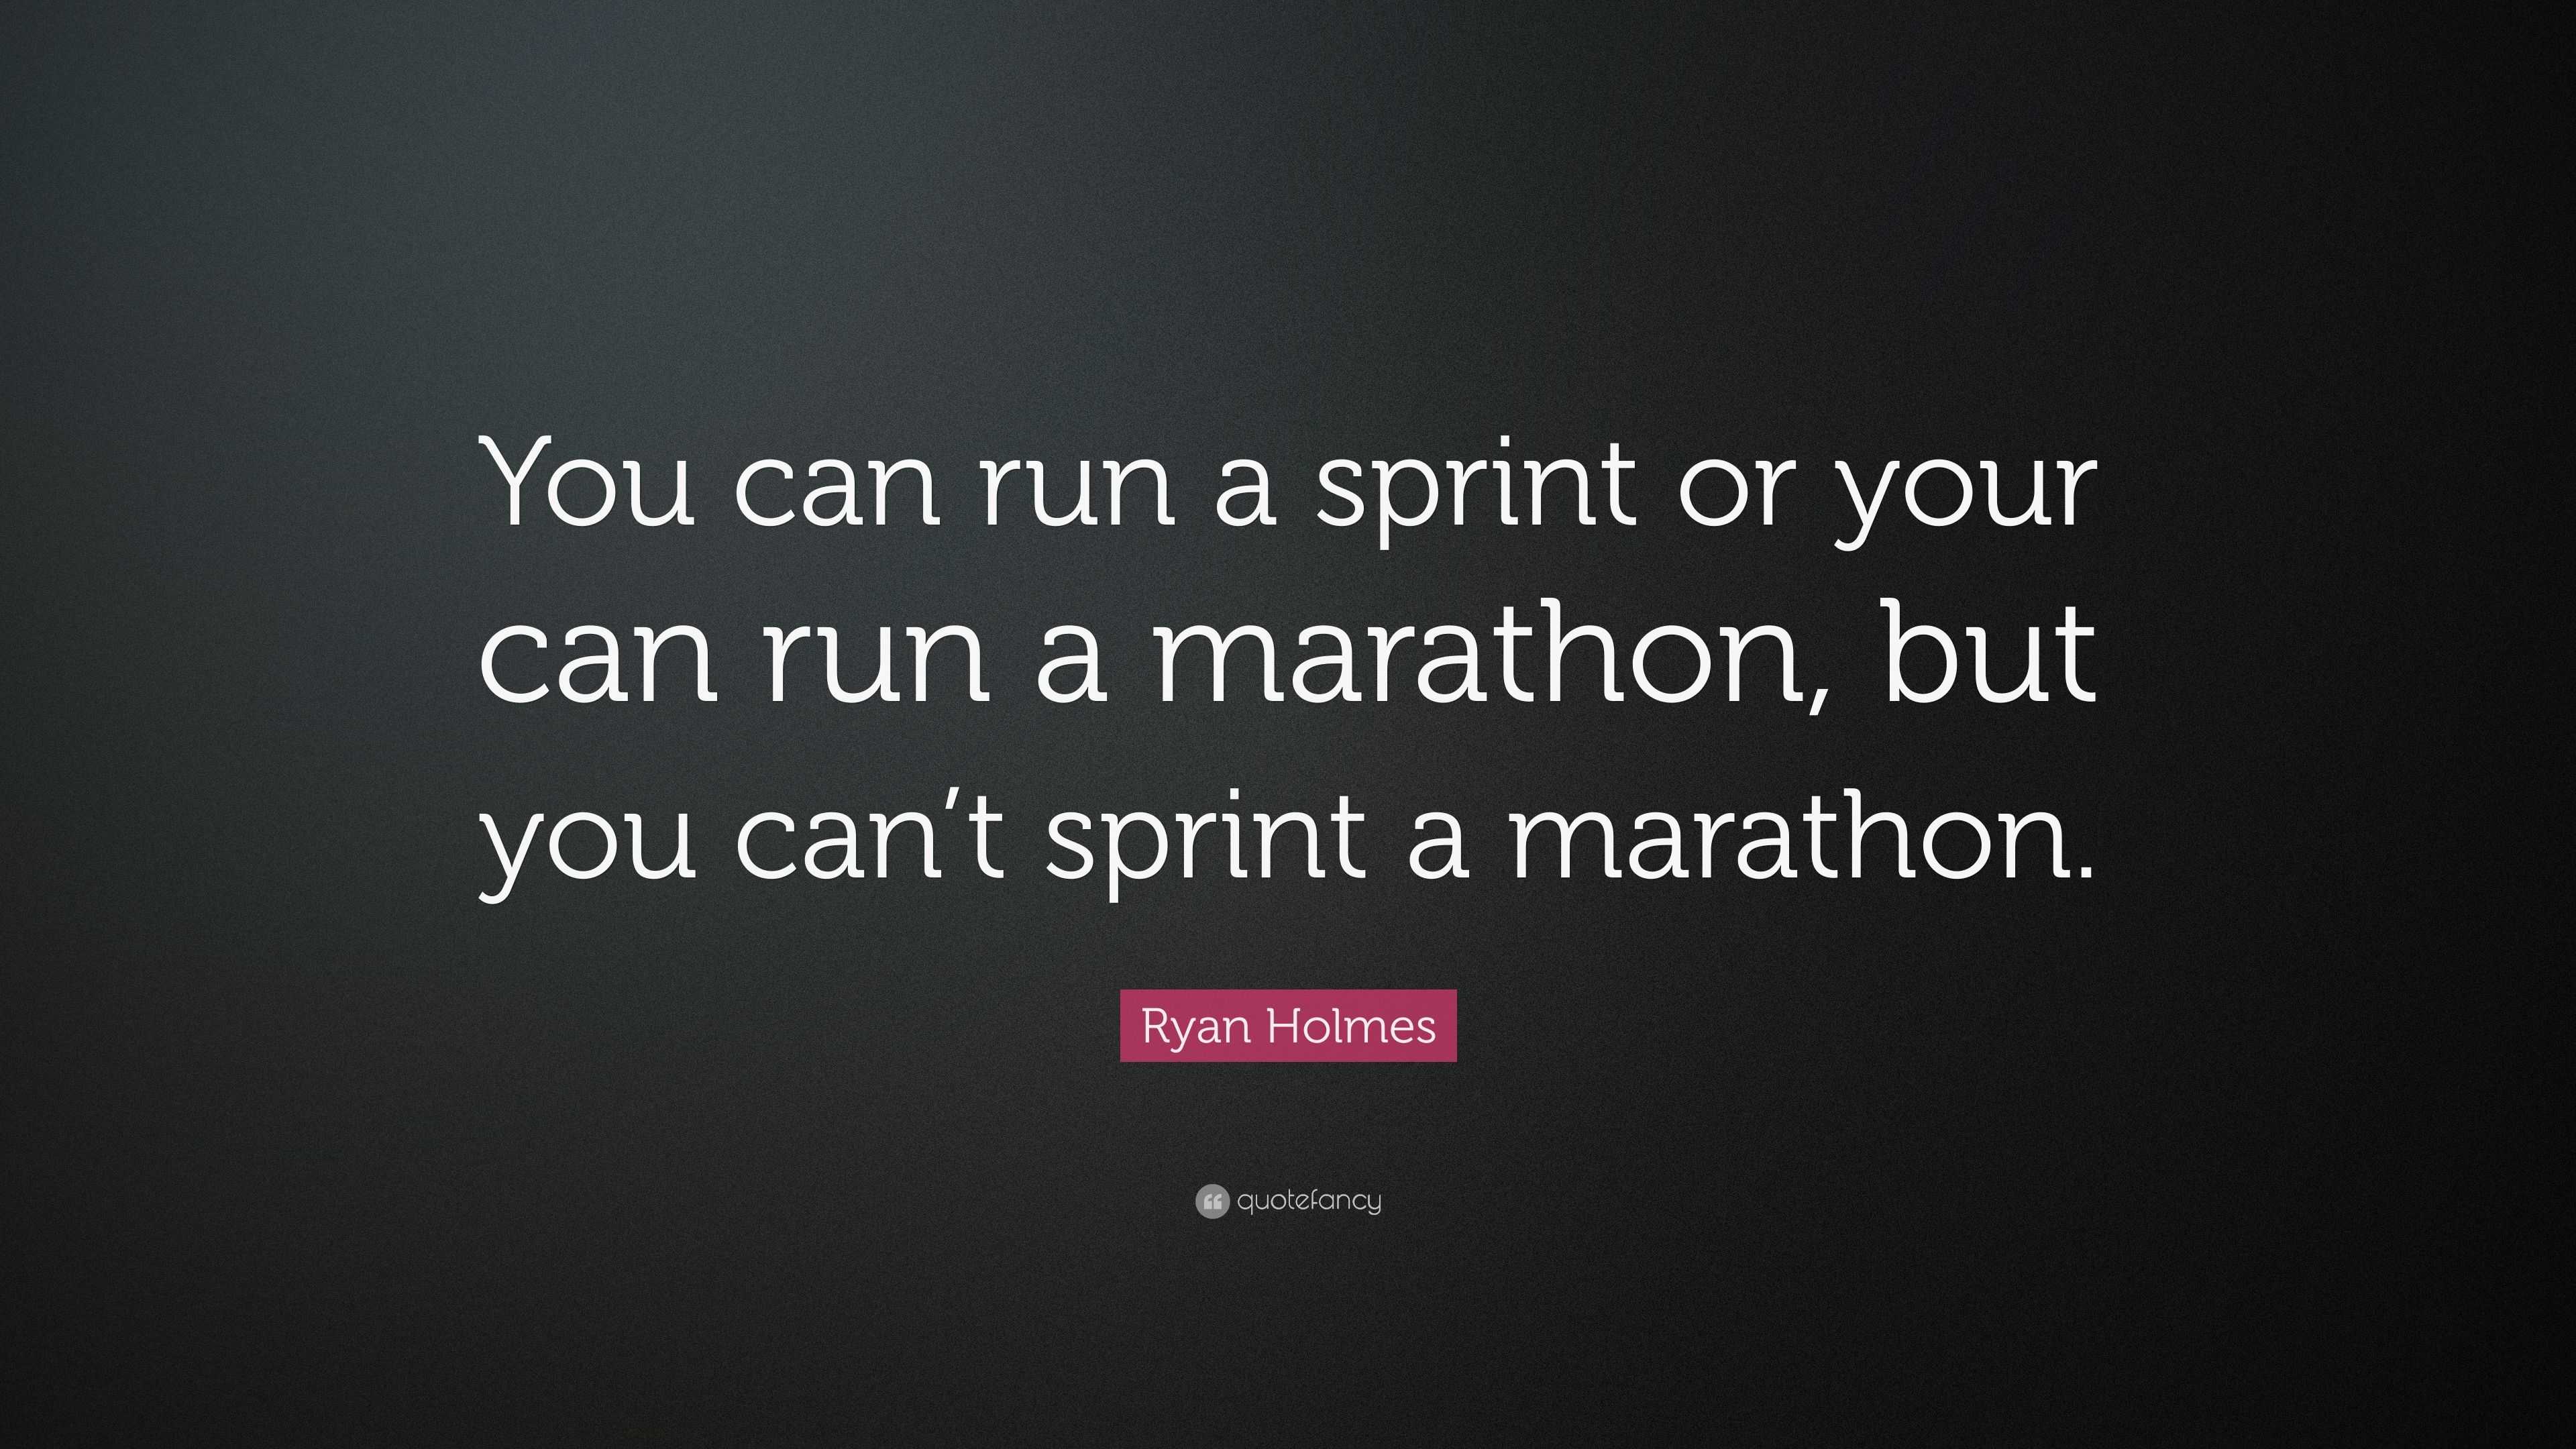 Ryan Holmes Quote: “You can run a sprint or your can run a marathon ...